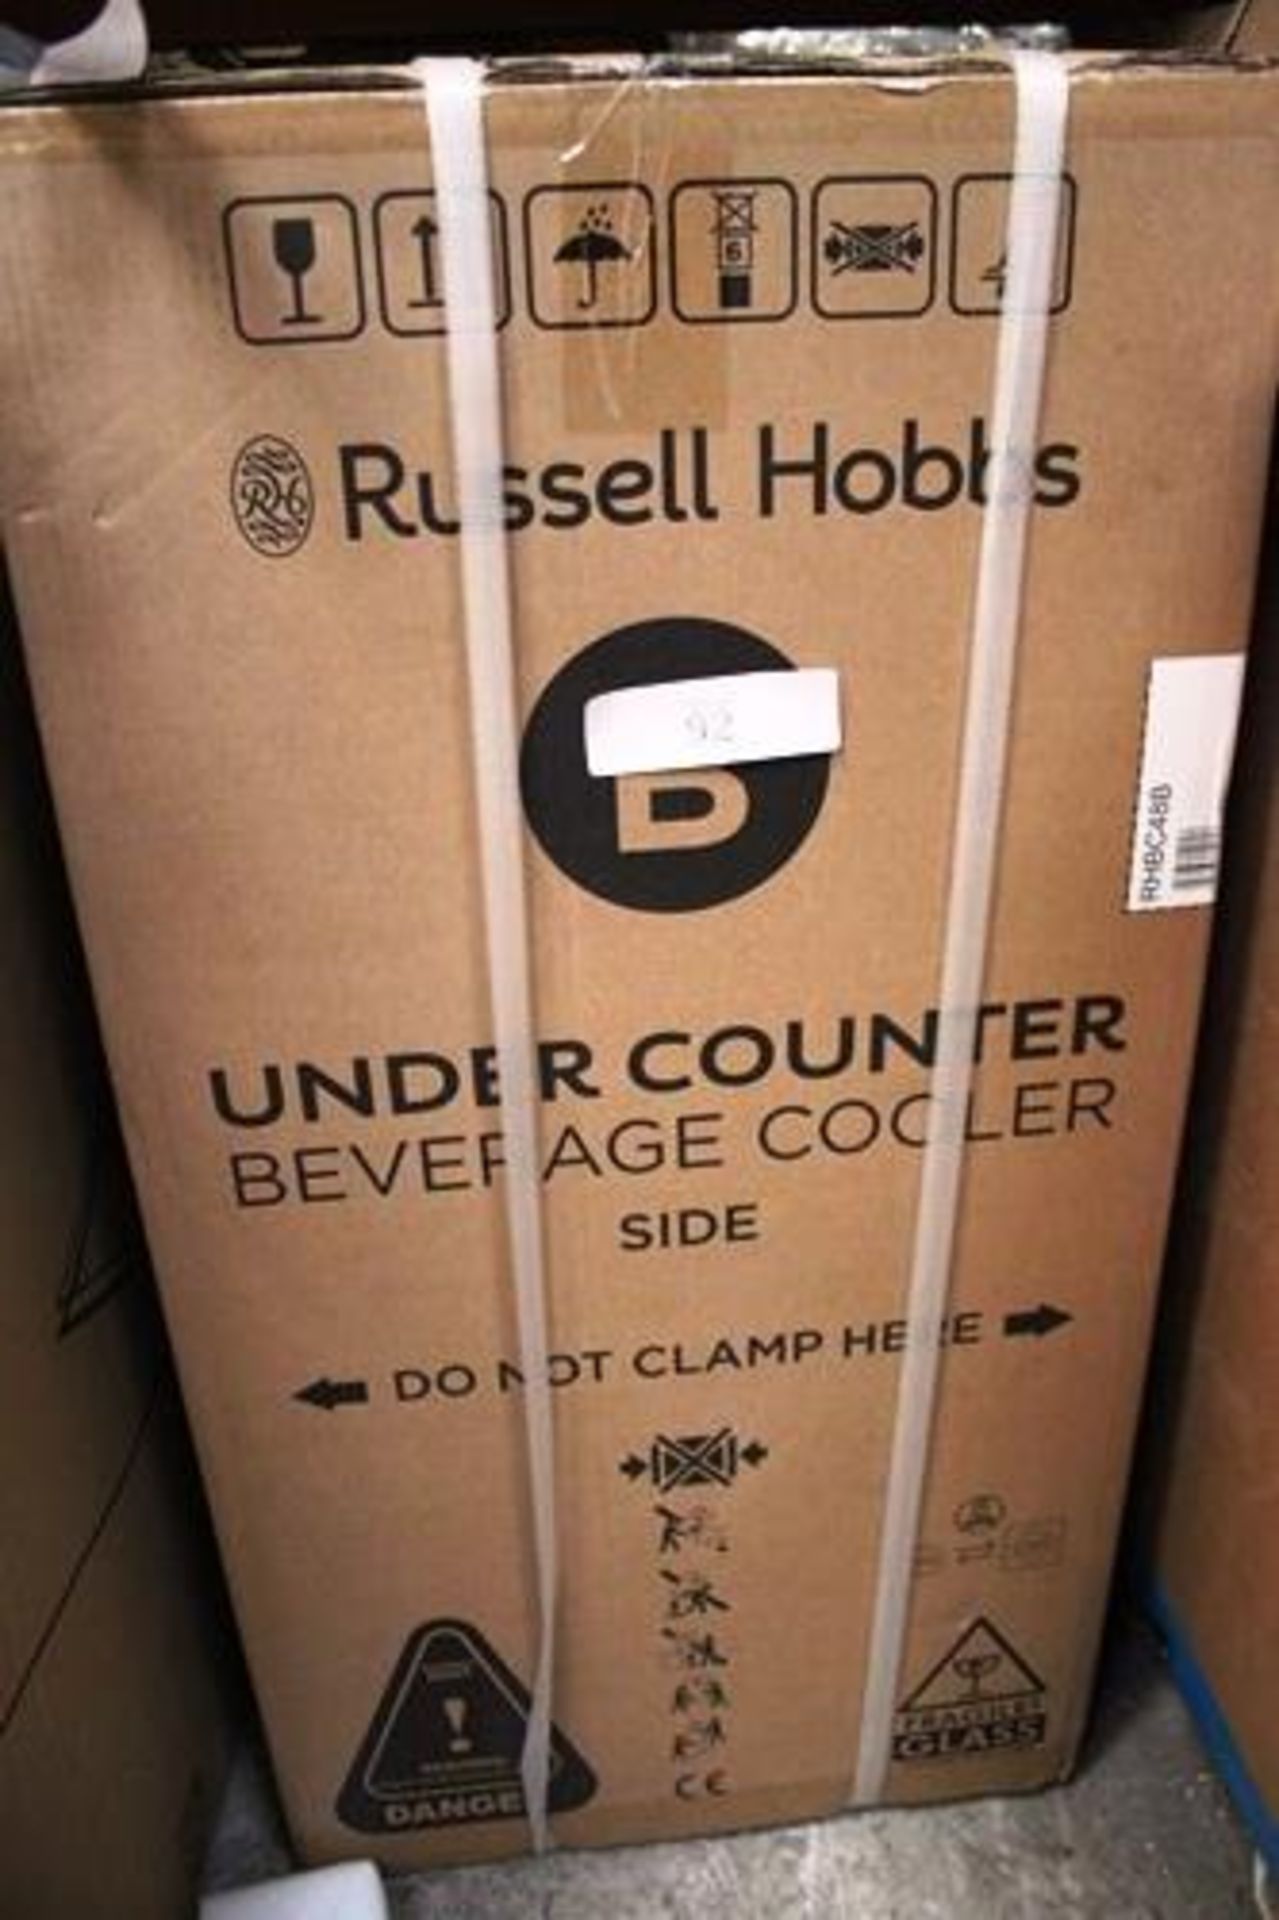 1 x Russell Hobbs under counter beverage cooler, model RHB-C48B - New (ES7)